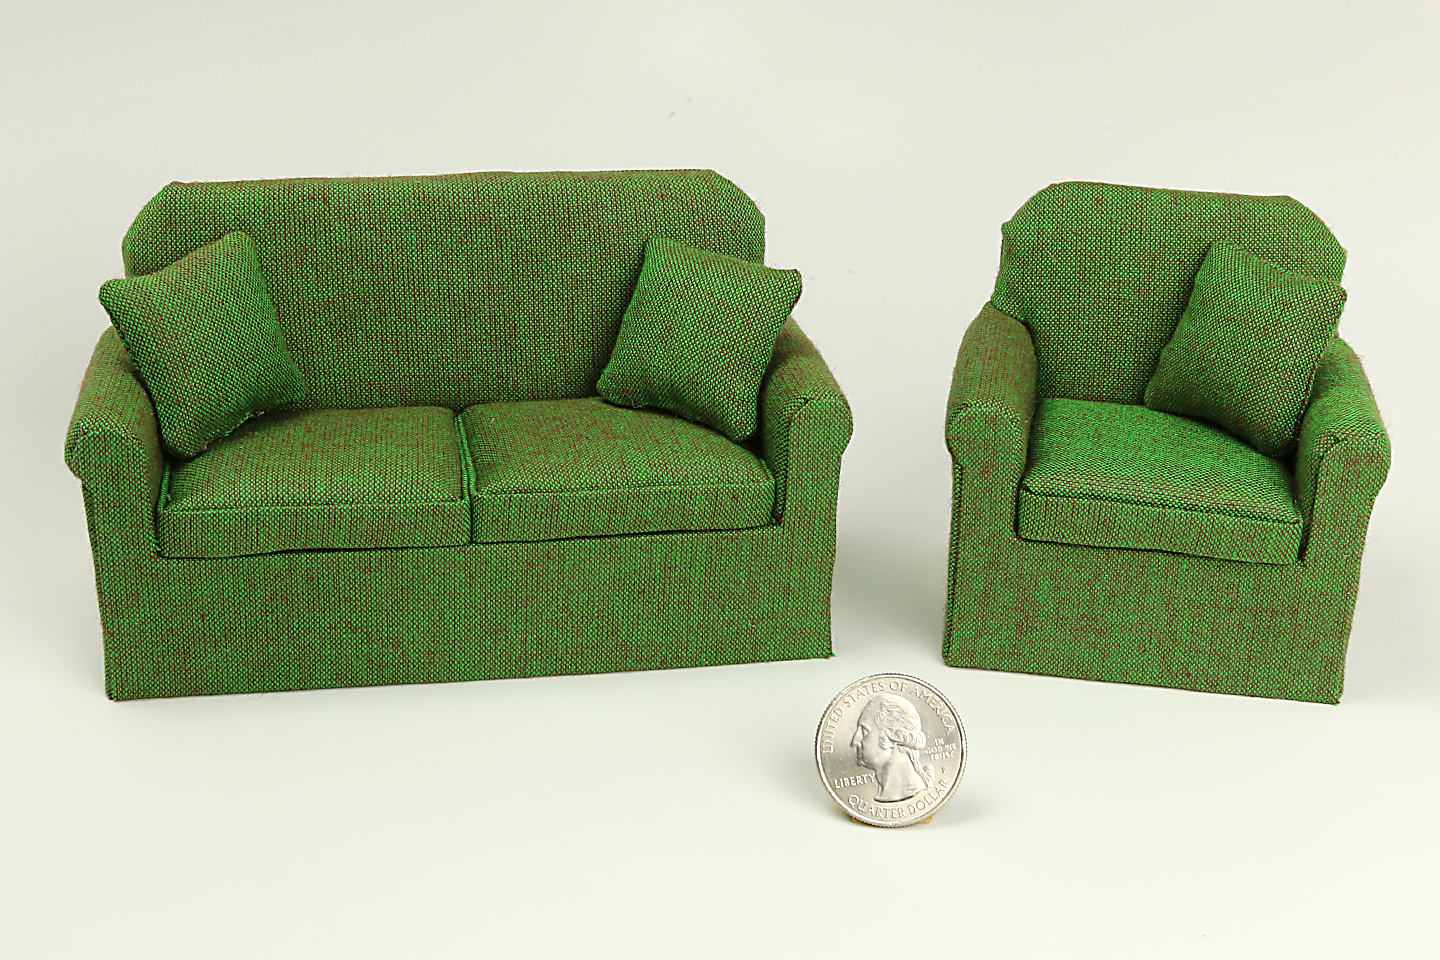 Forest Green Basics Sofa